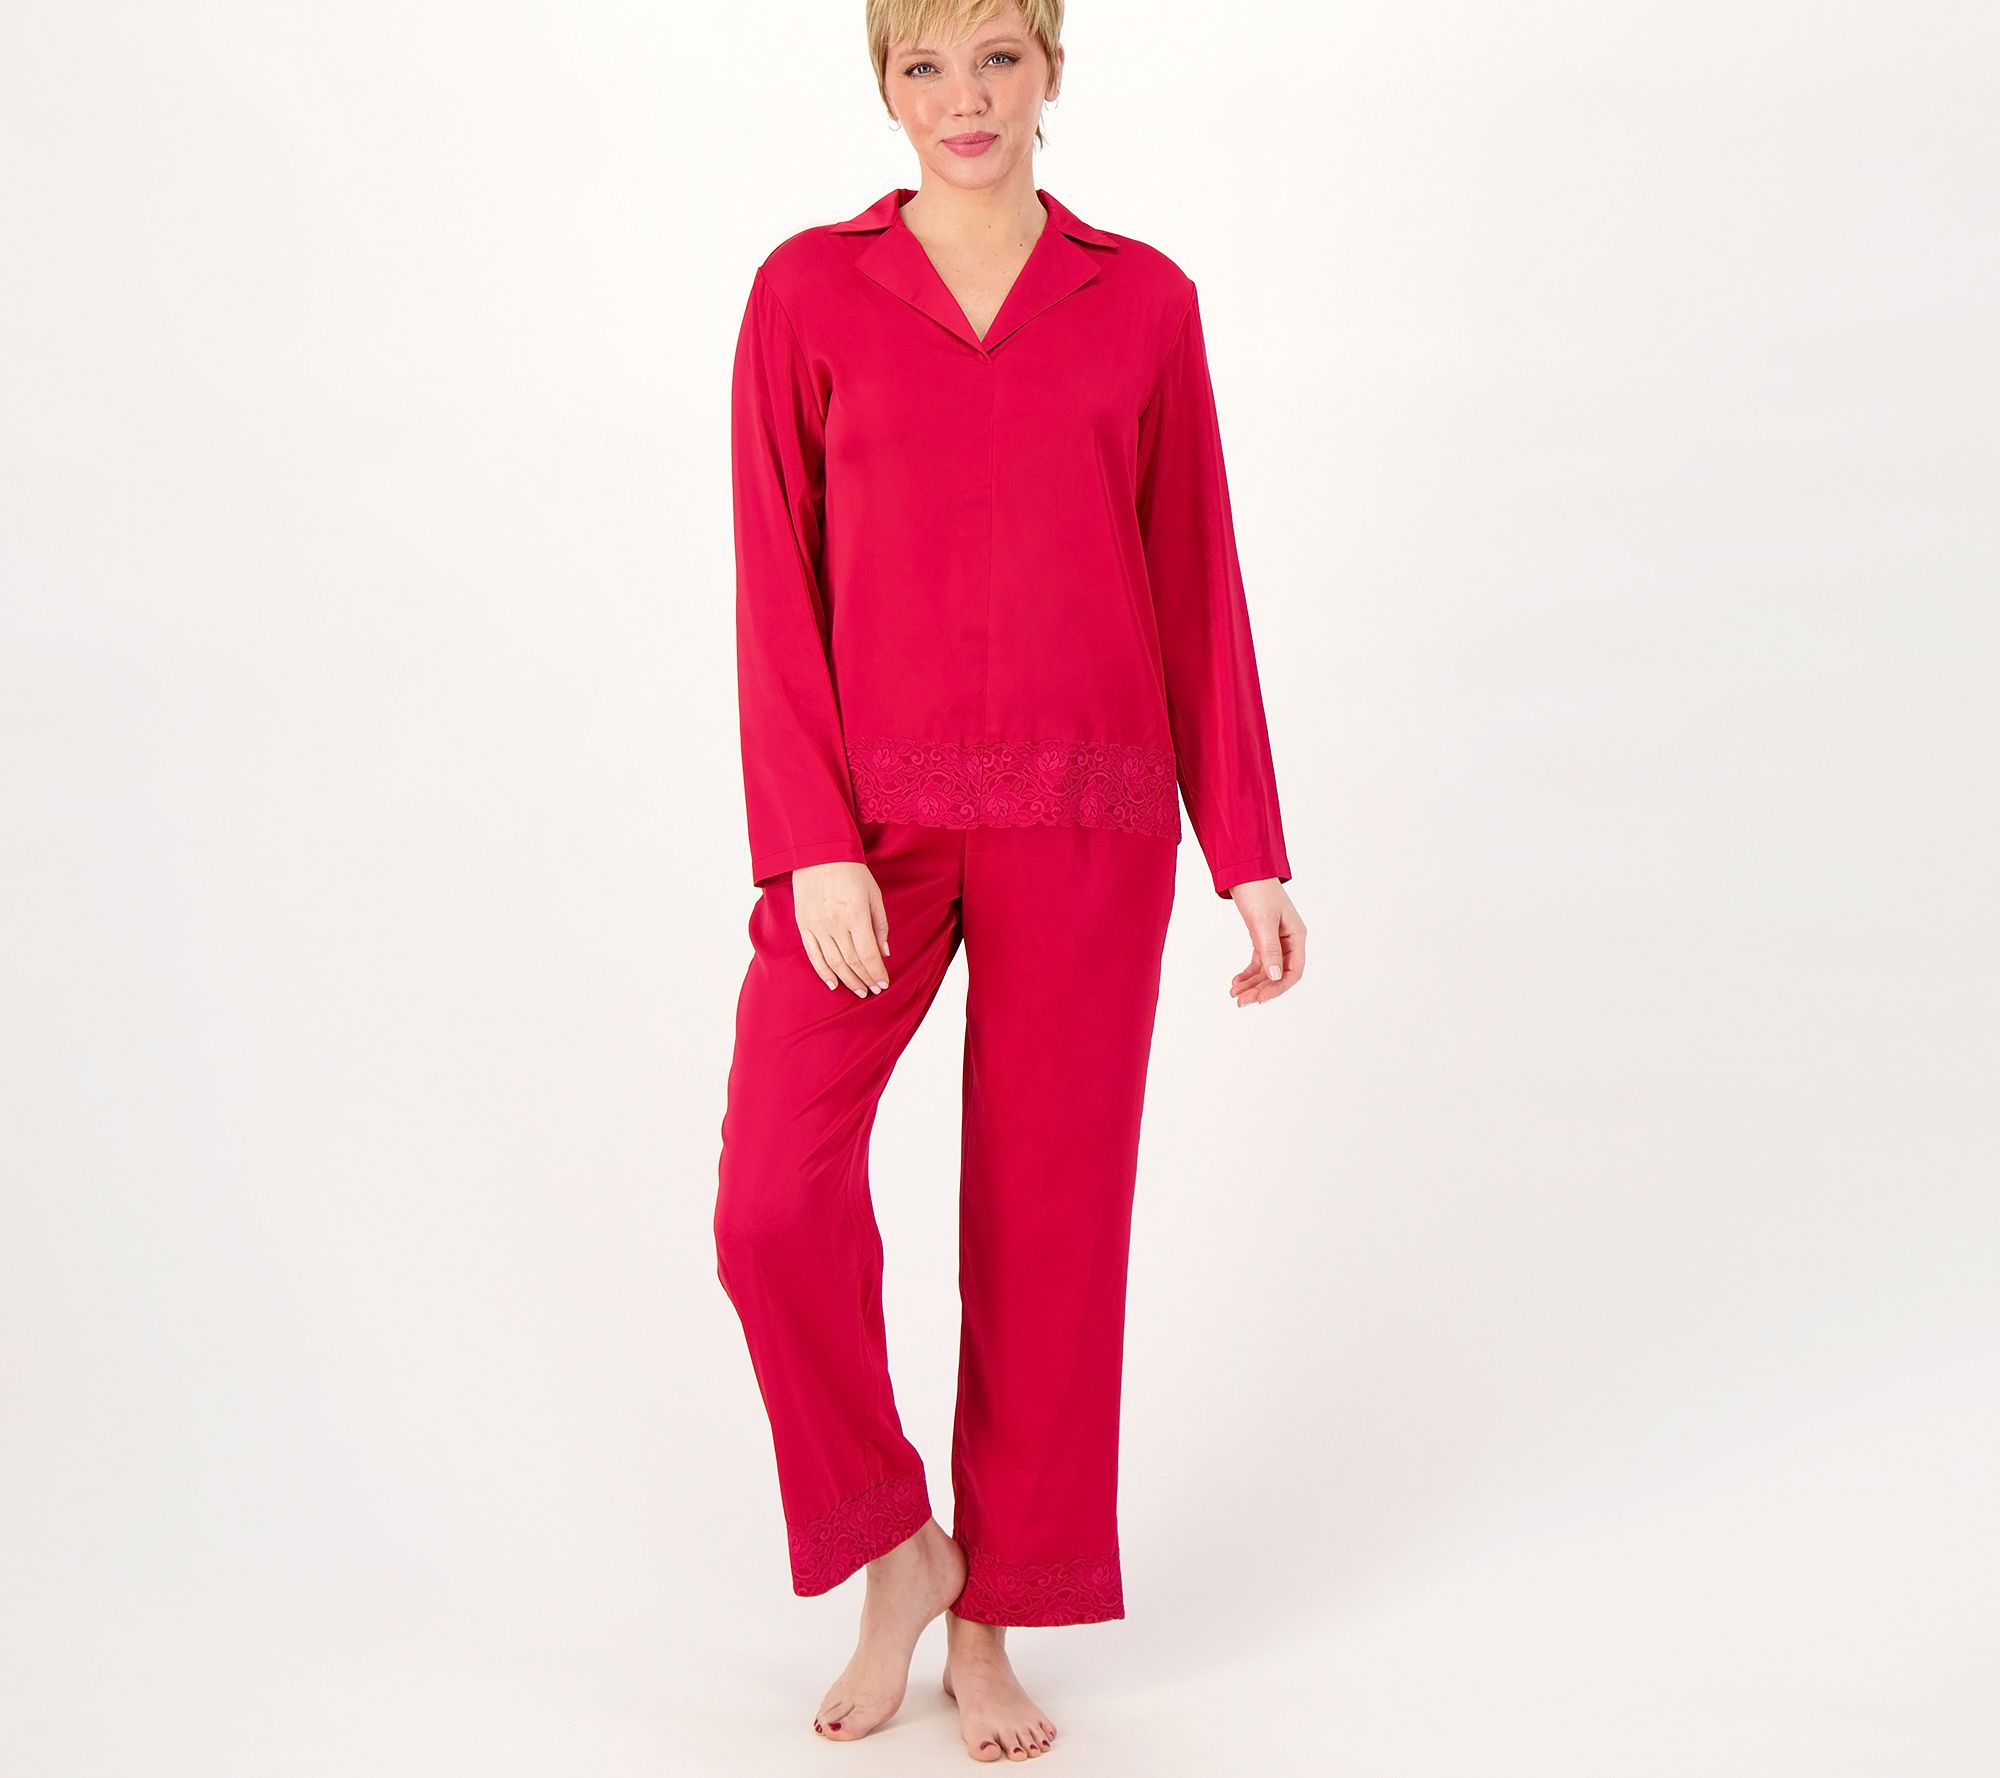 notch neck printed nightwear pyjama set